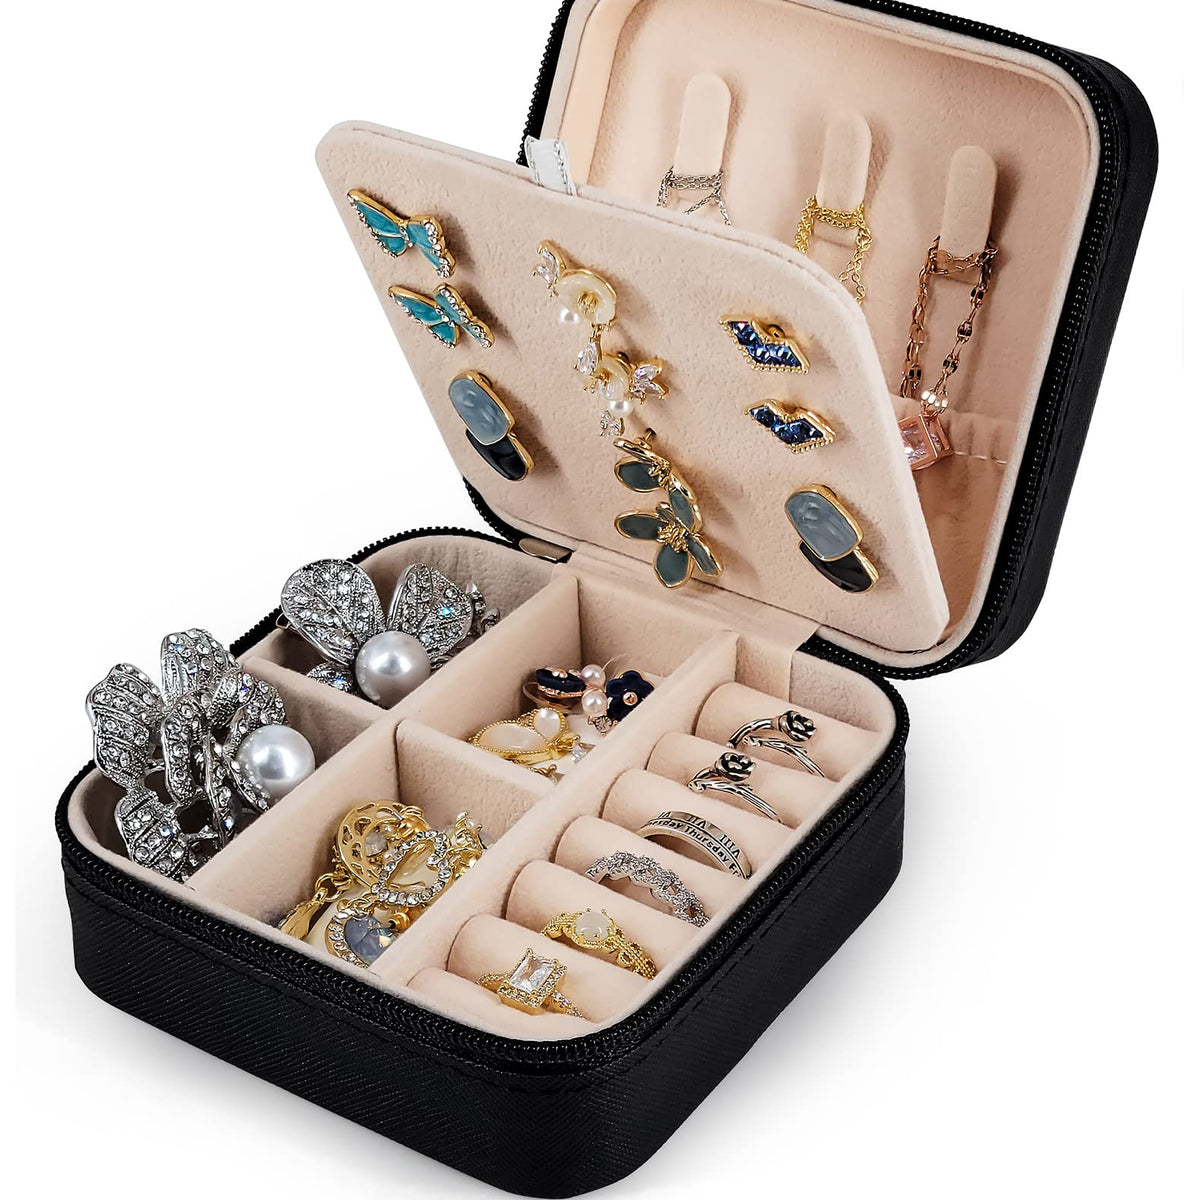 MODENGKONGJIAN Mini Jewelry Travel Case, PU Leather Travel Jewelry  Organizer Box, Small Portable Portable Jewellery Storage Holder for Womens  Rings